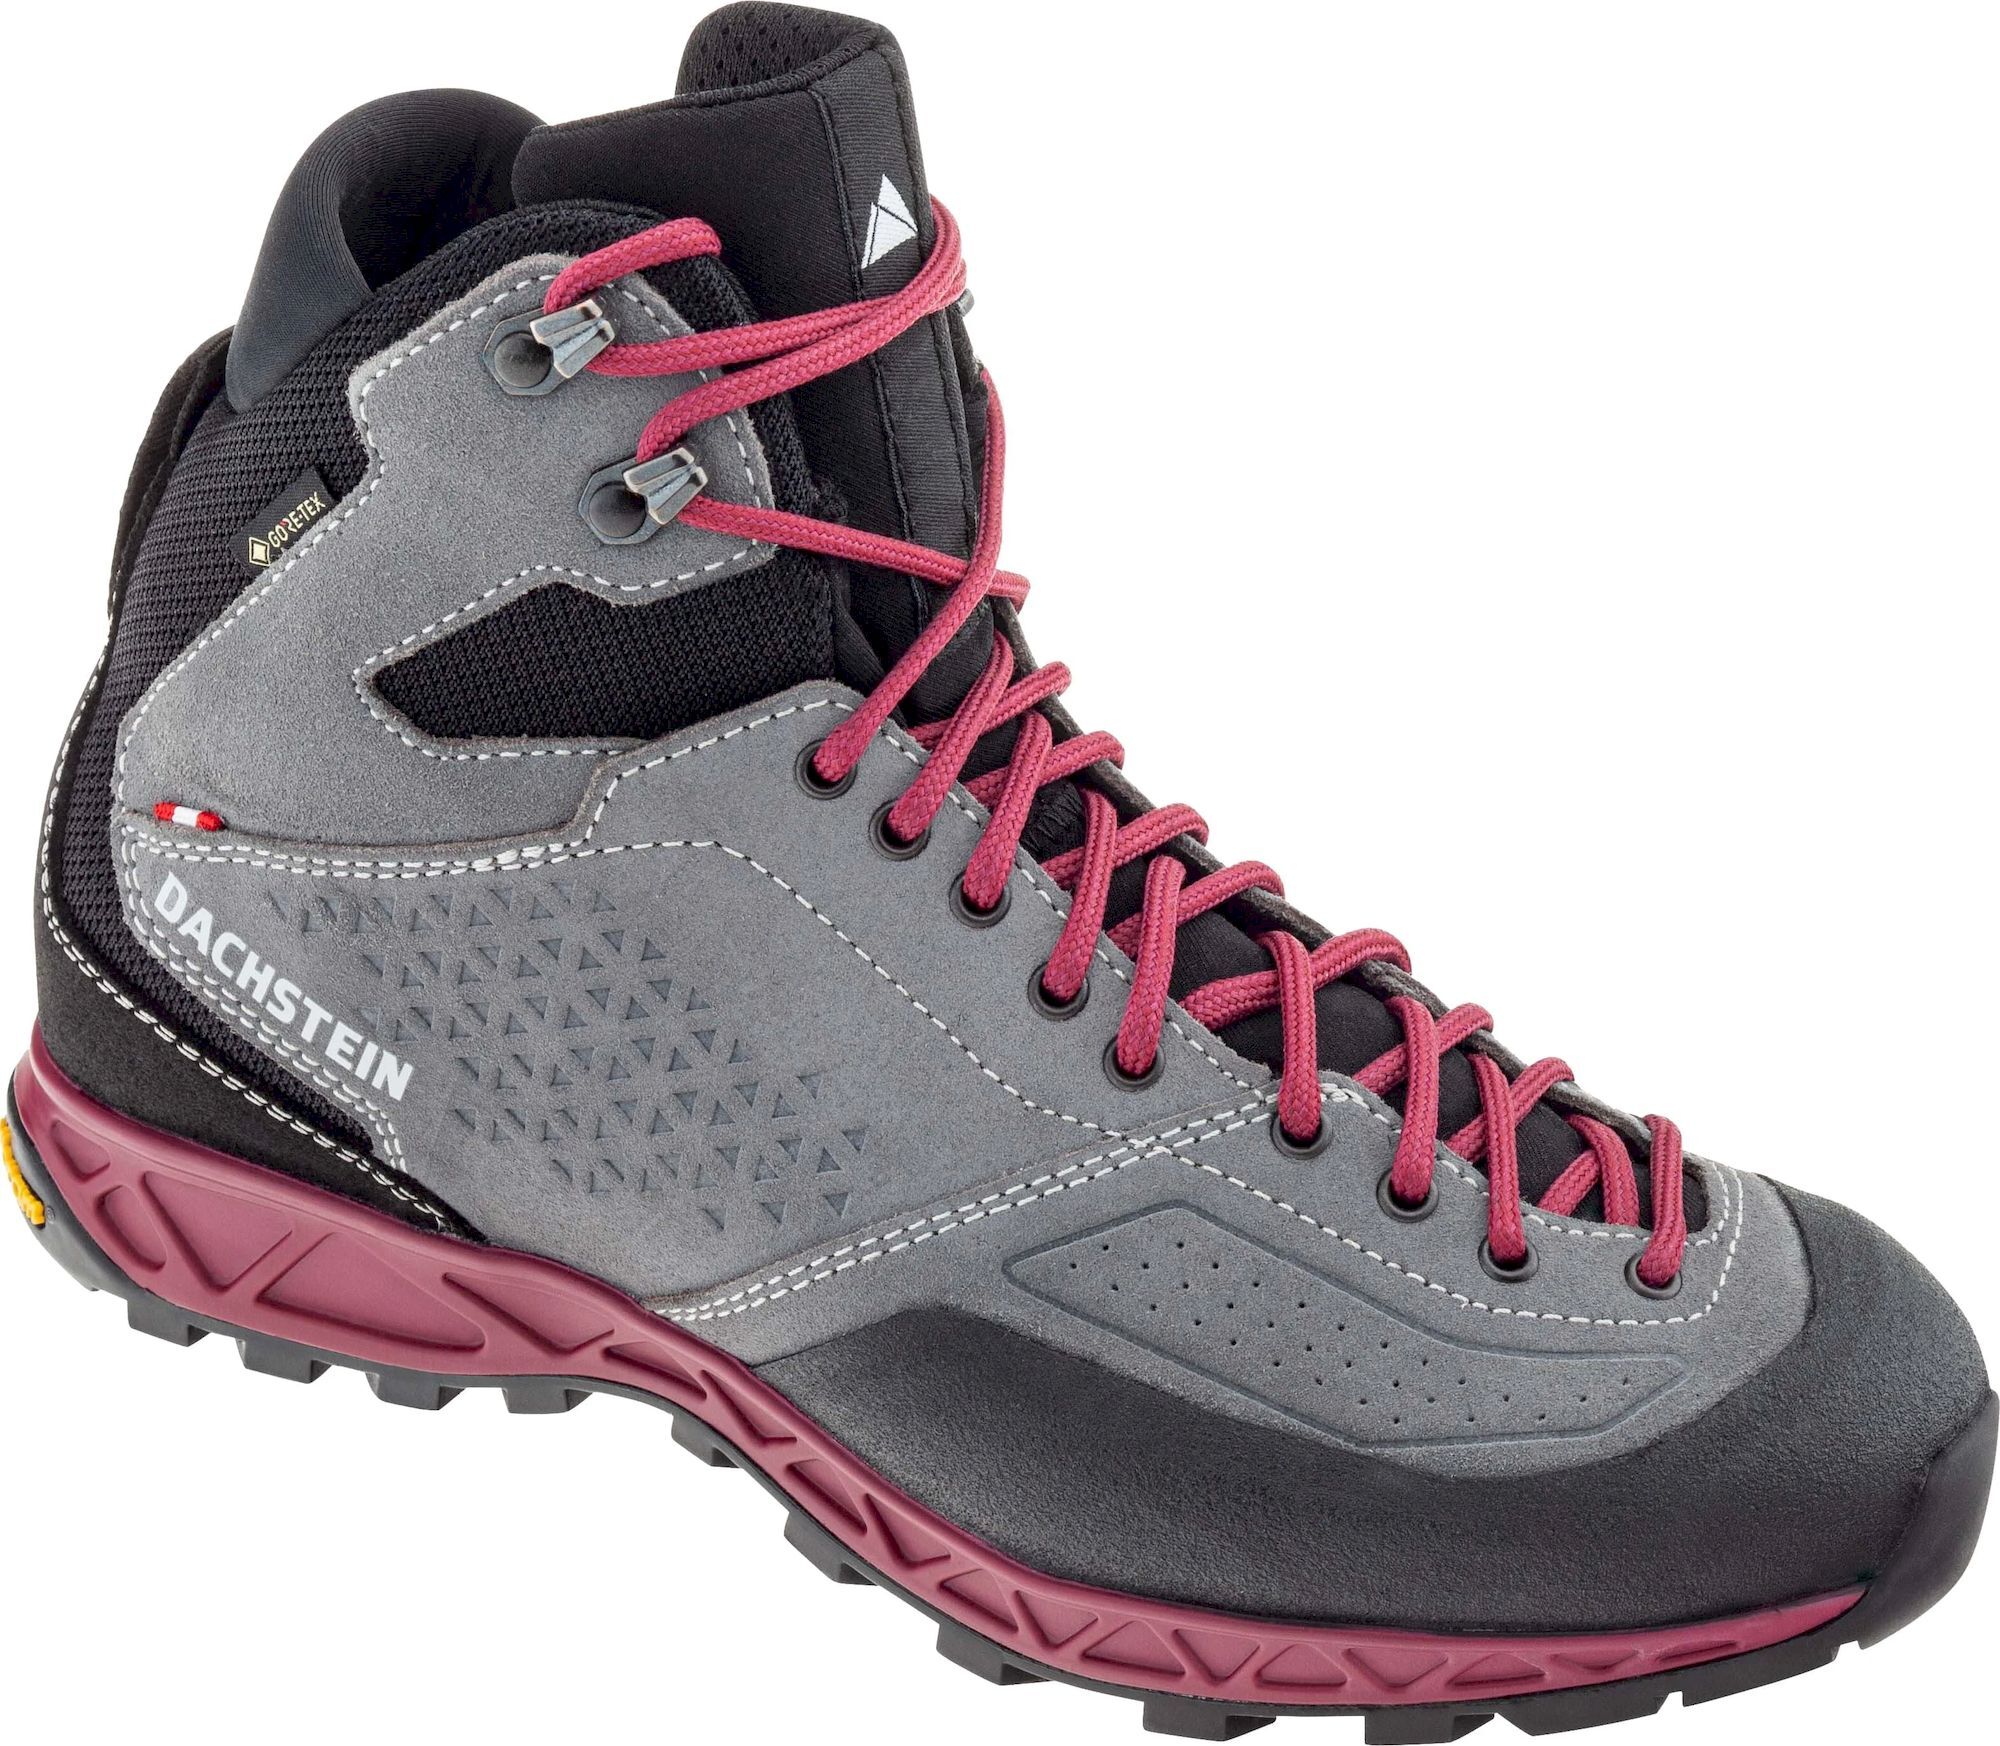 Dachstein Super Ferrata M GTX - Hiking shoes - Women's